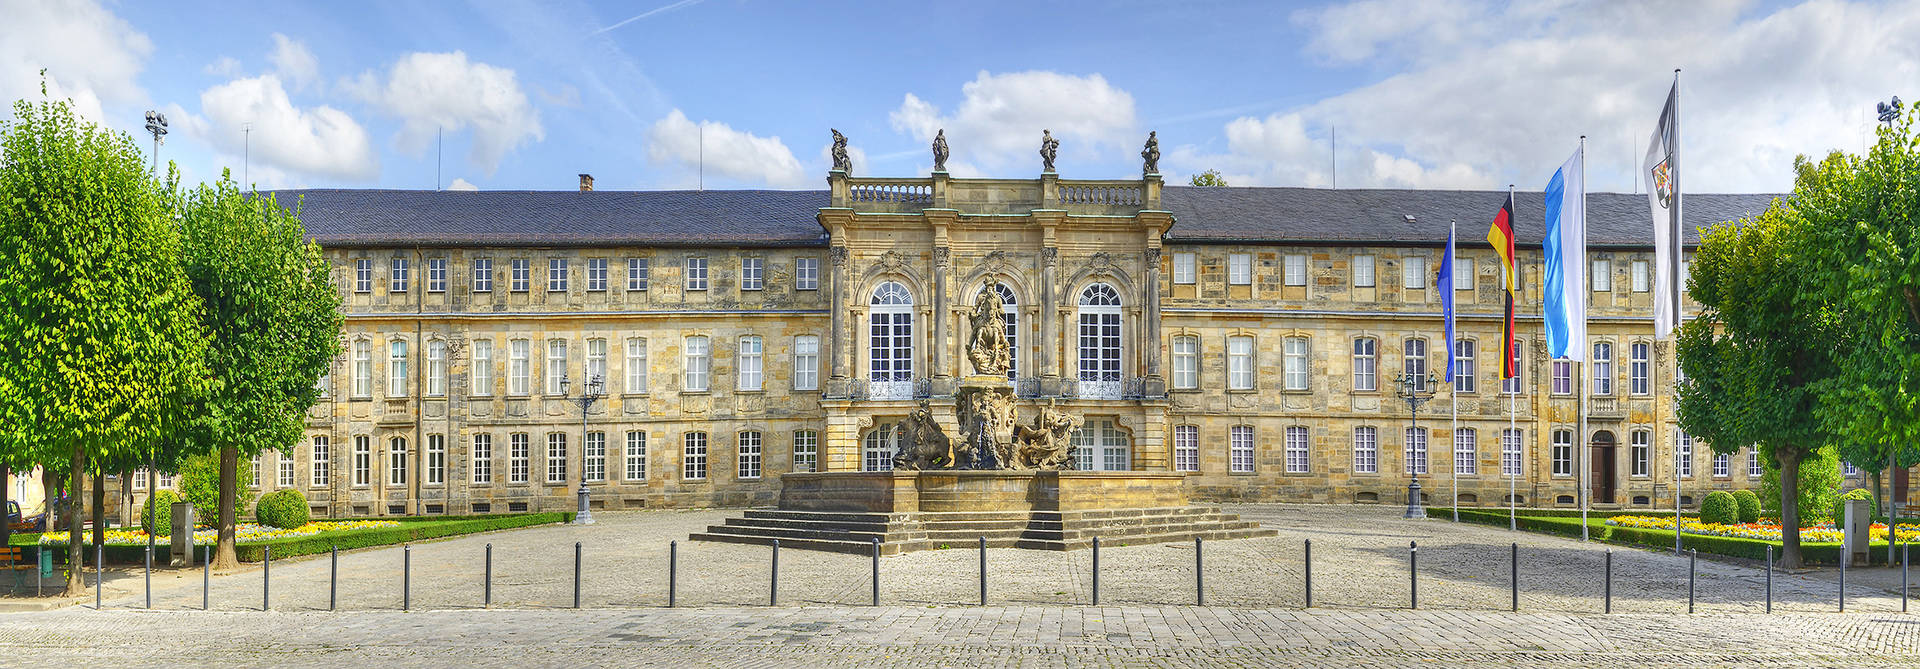 Castello Nuovo - H4 Hotel Residenzschloss Bayreuth - Sito web ufficiale